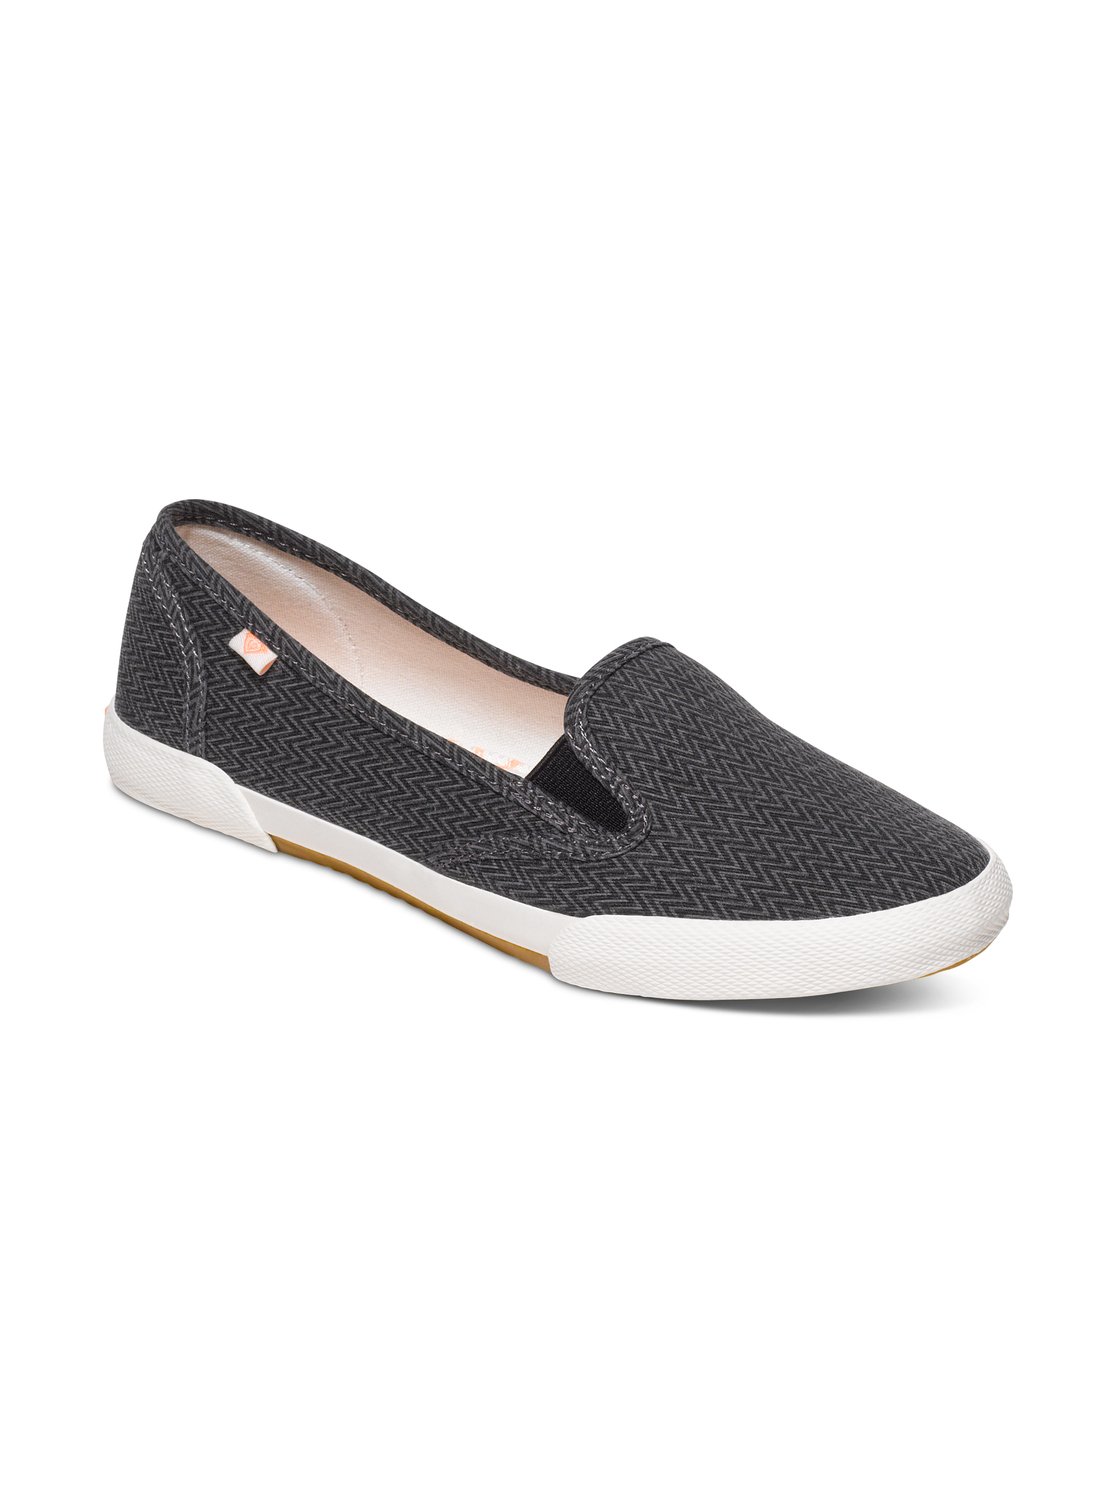 Malibu Slip-On Shoes ARJS300229 | Roxy